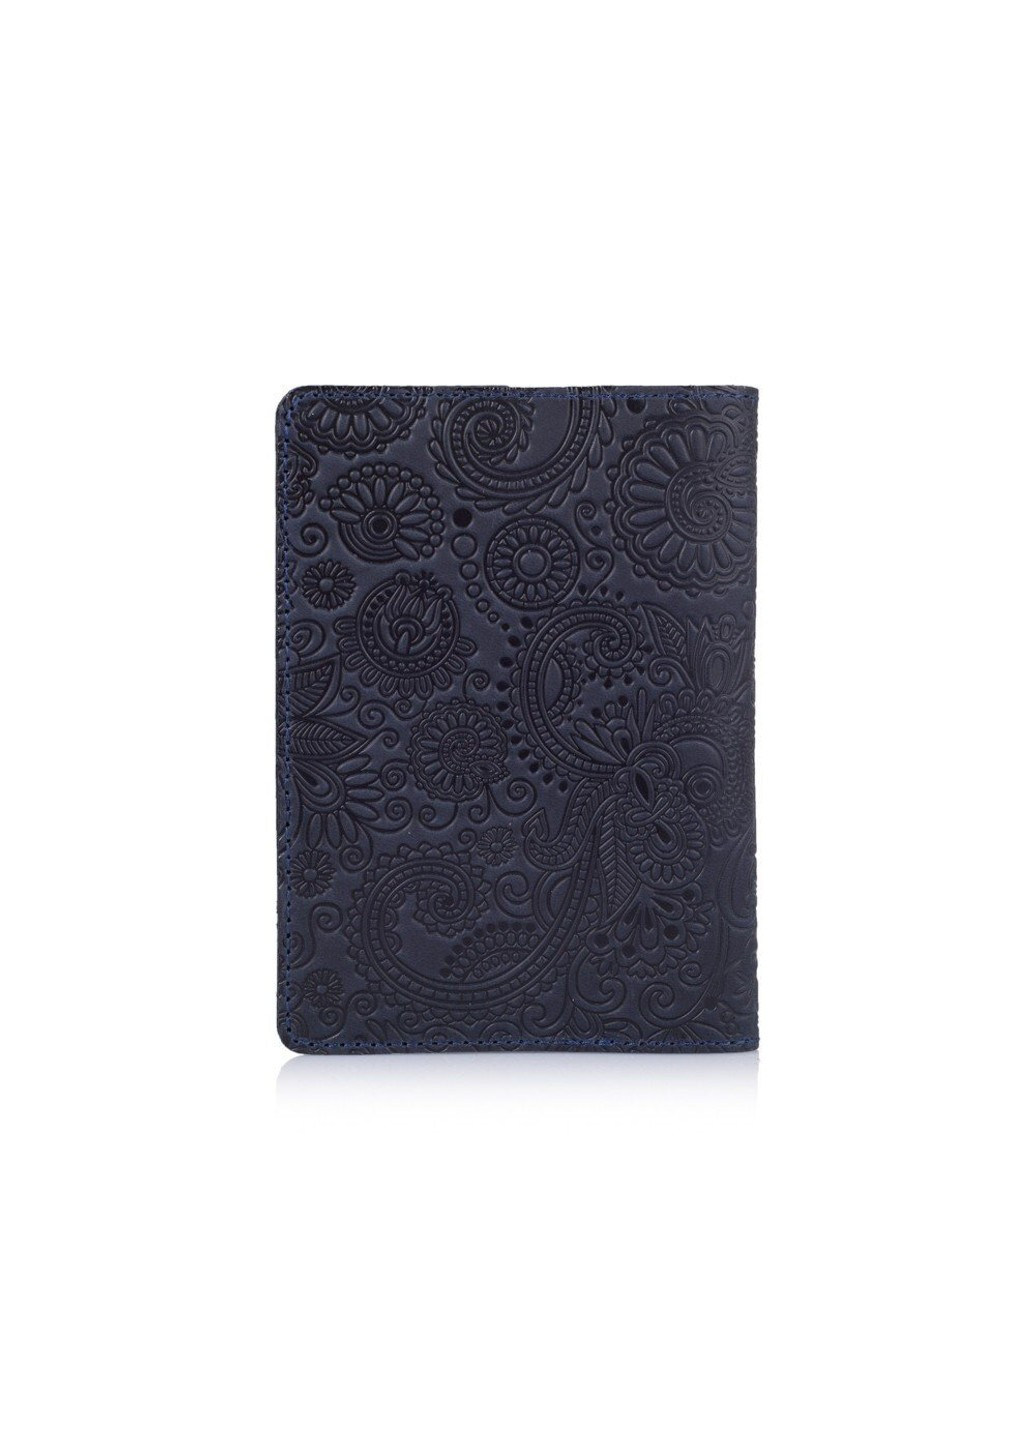 Обложка для паспорта из кожи HiArt PC-02 темно-синяя Темно-синий Hi Art (268371538)